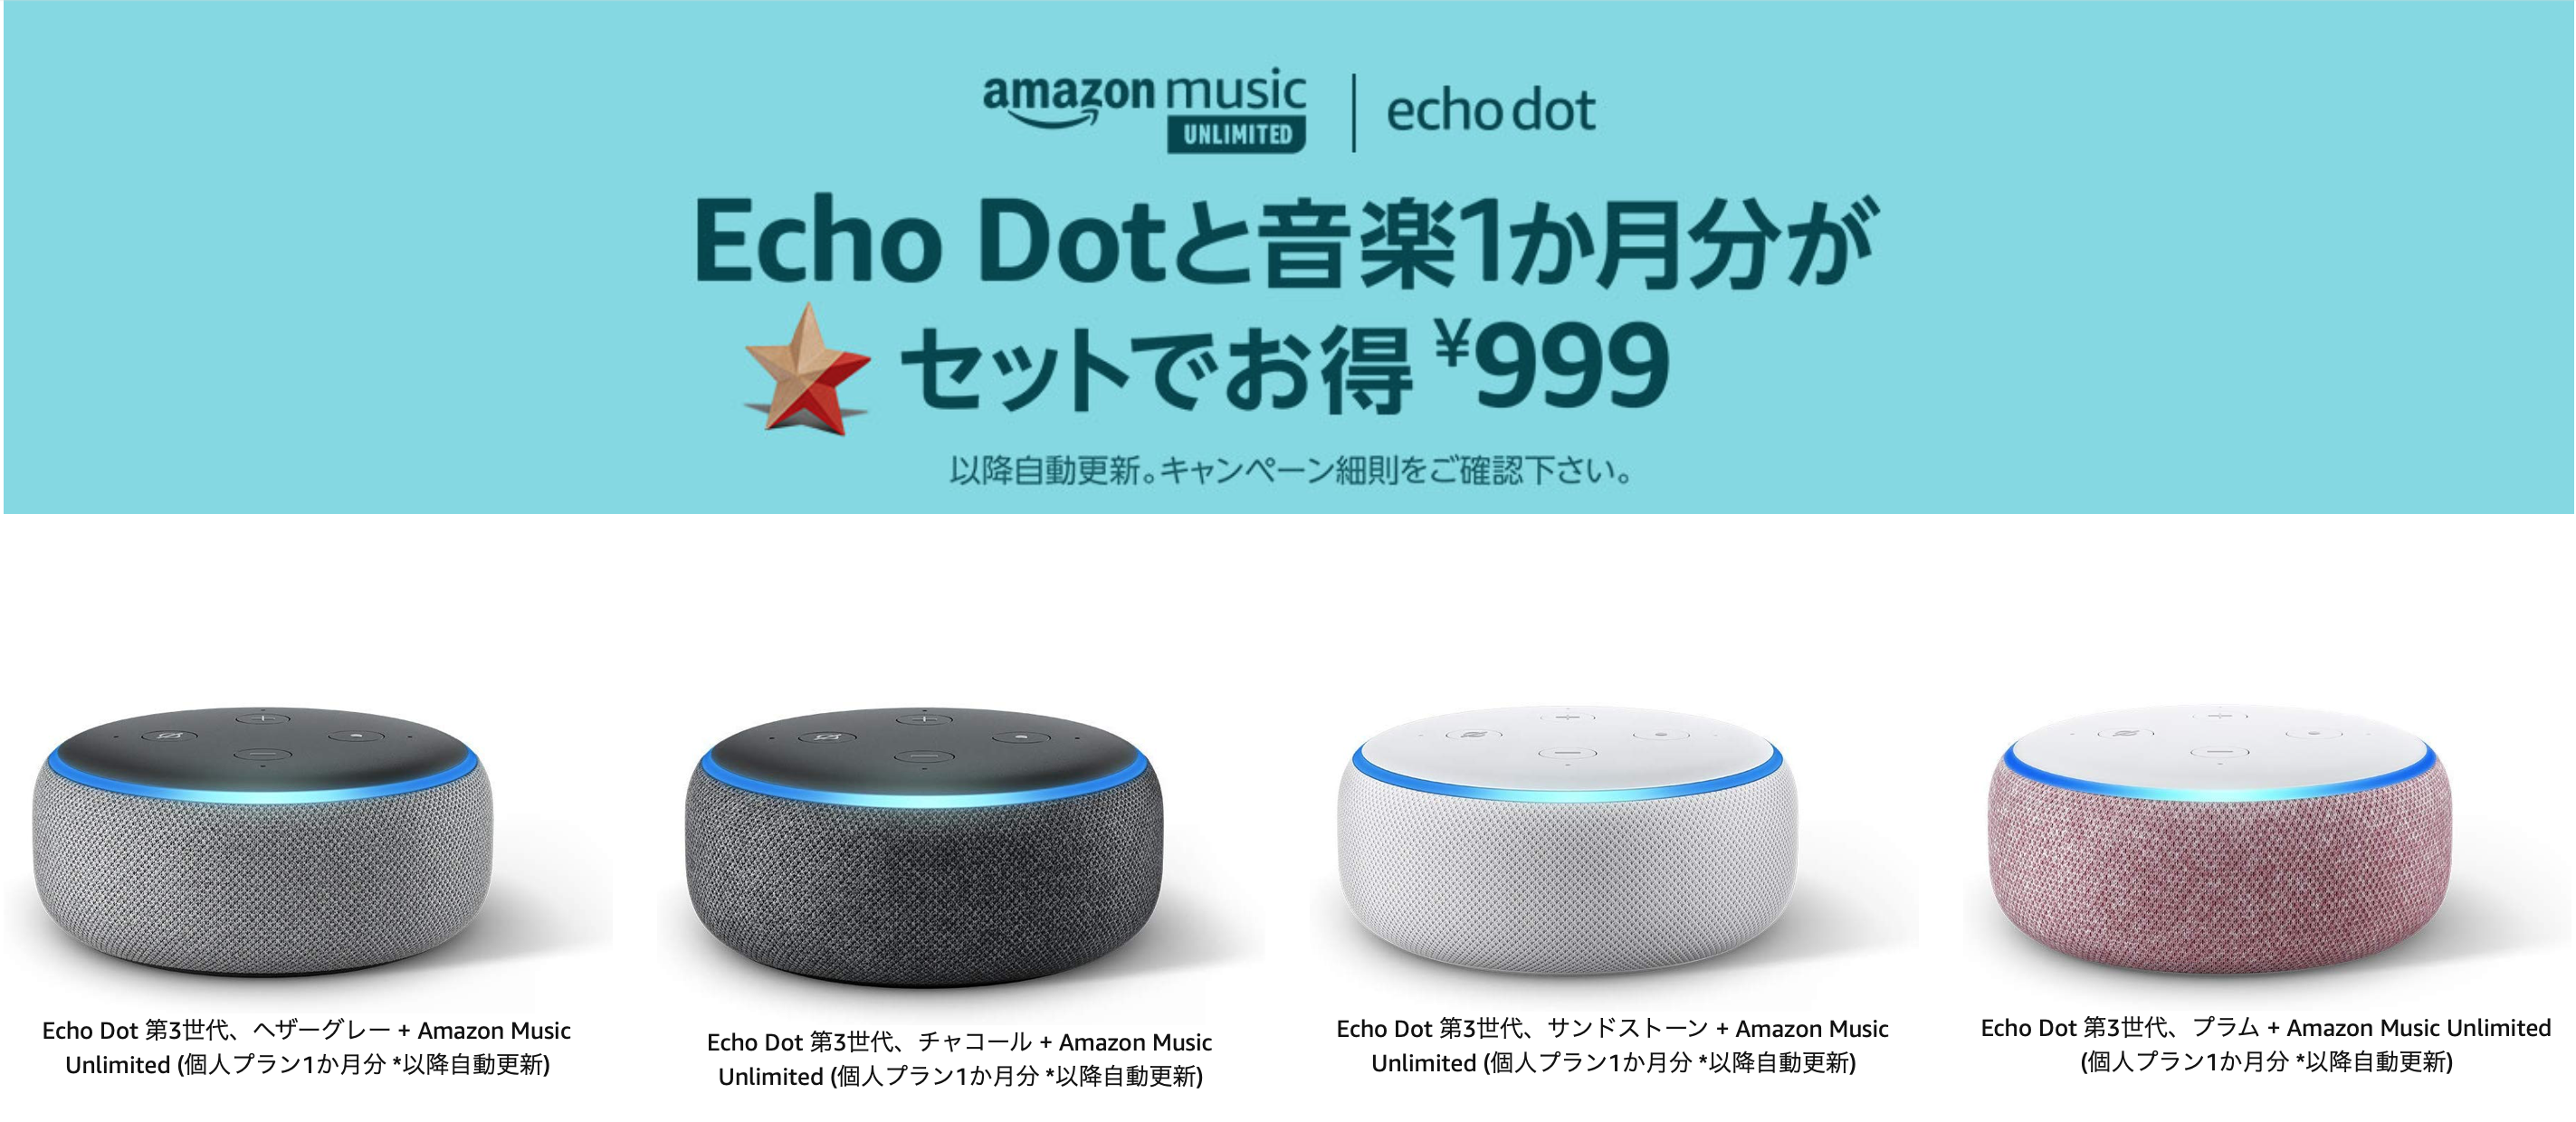 Amazon、Eco Dotが999円で特価販売！Amazon Music Unlimitedとセットで1ヶ月無料になる